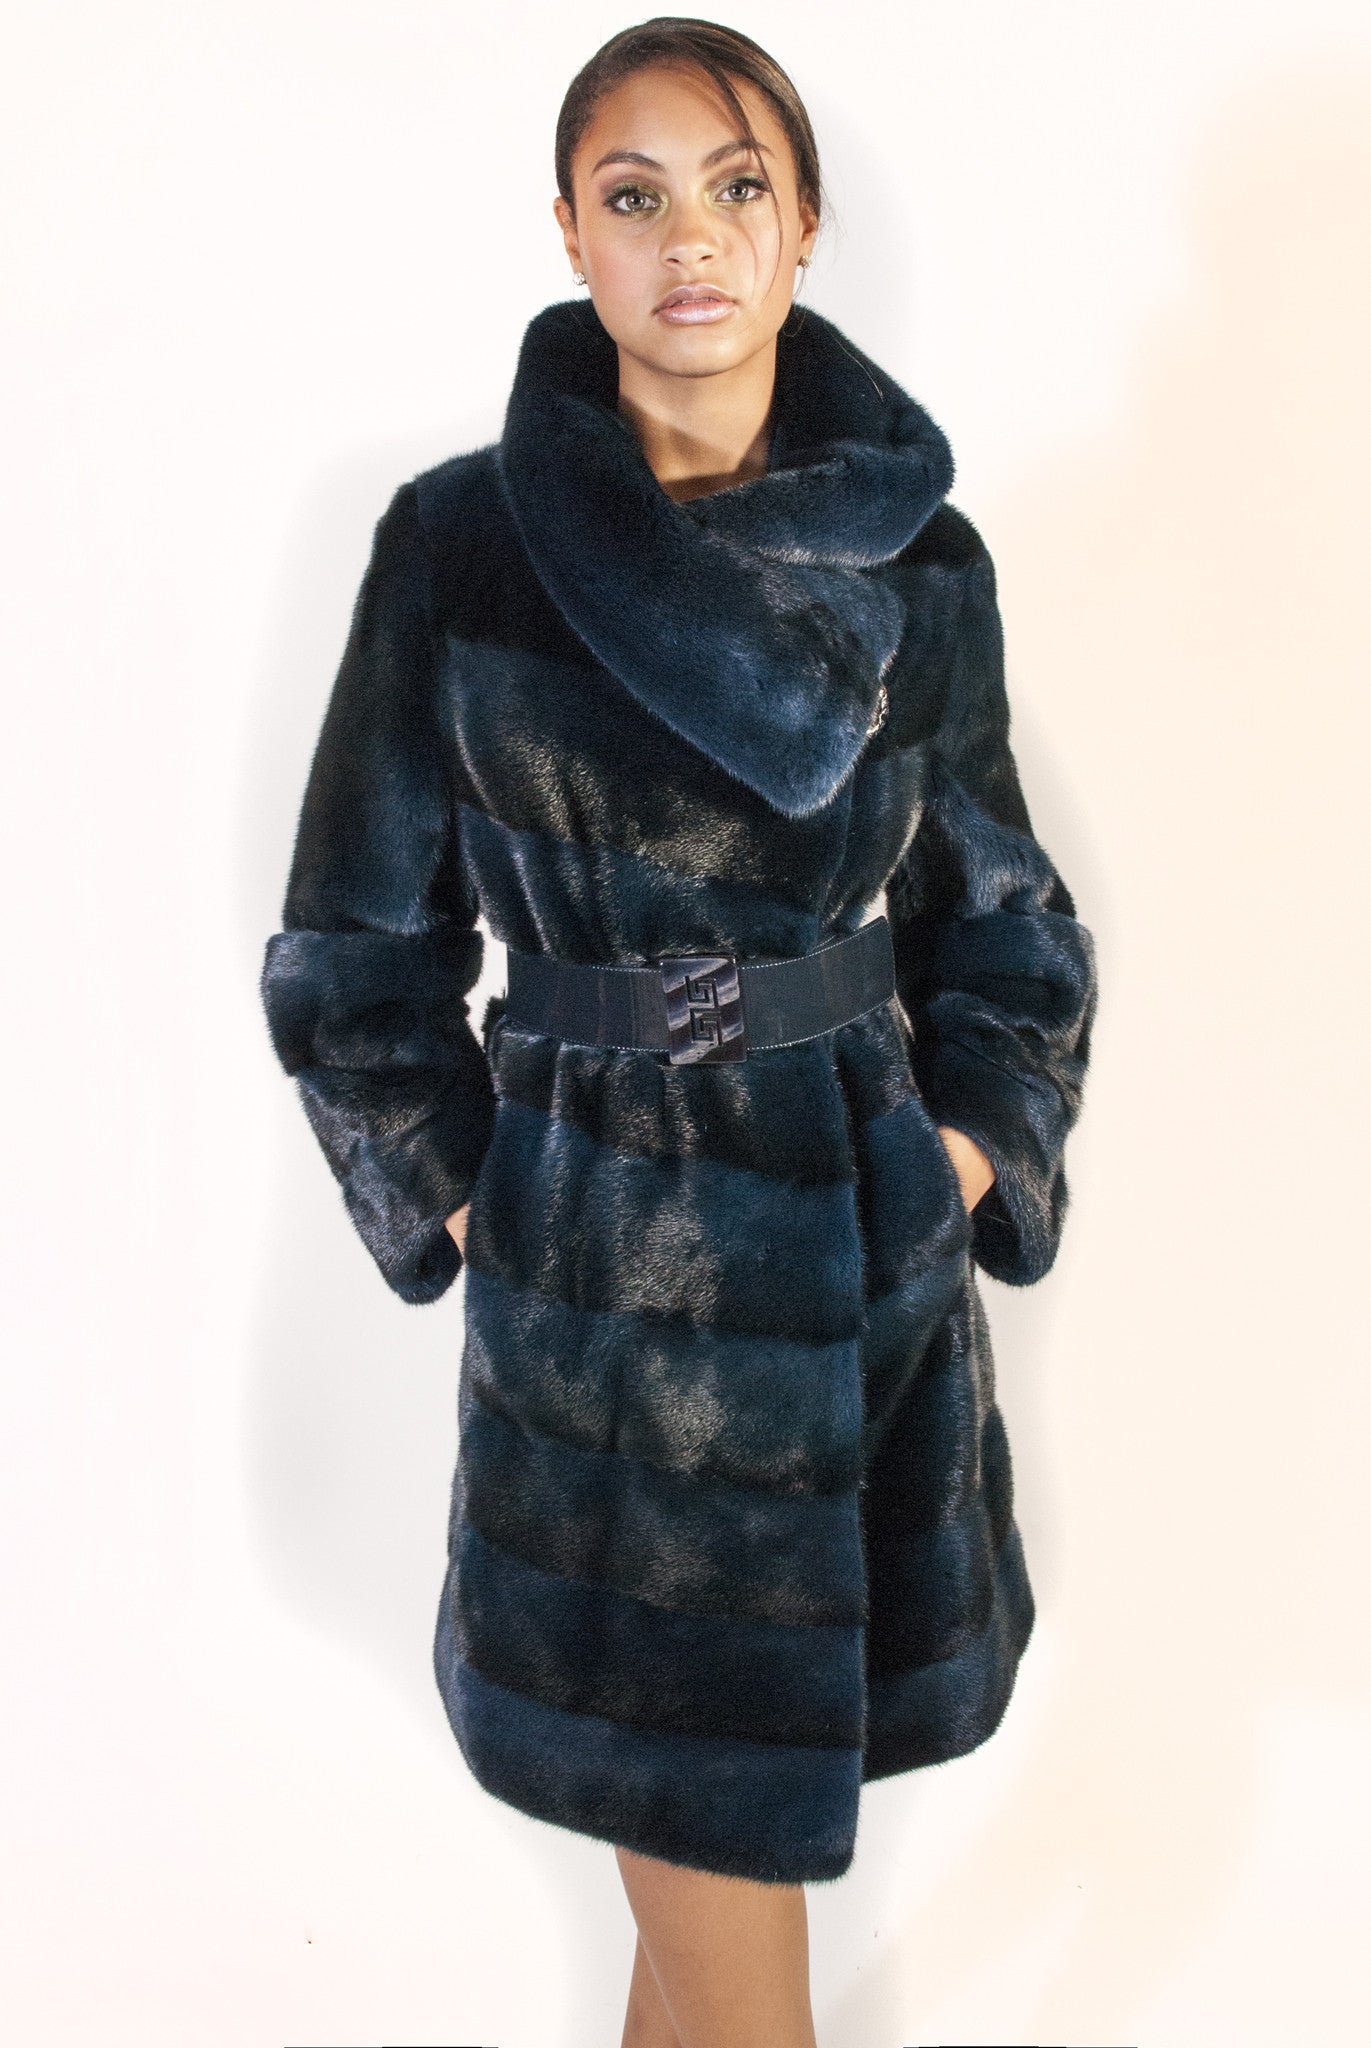 Diagonal Mink Coat with Belt and Full Collar - alexandros-furs